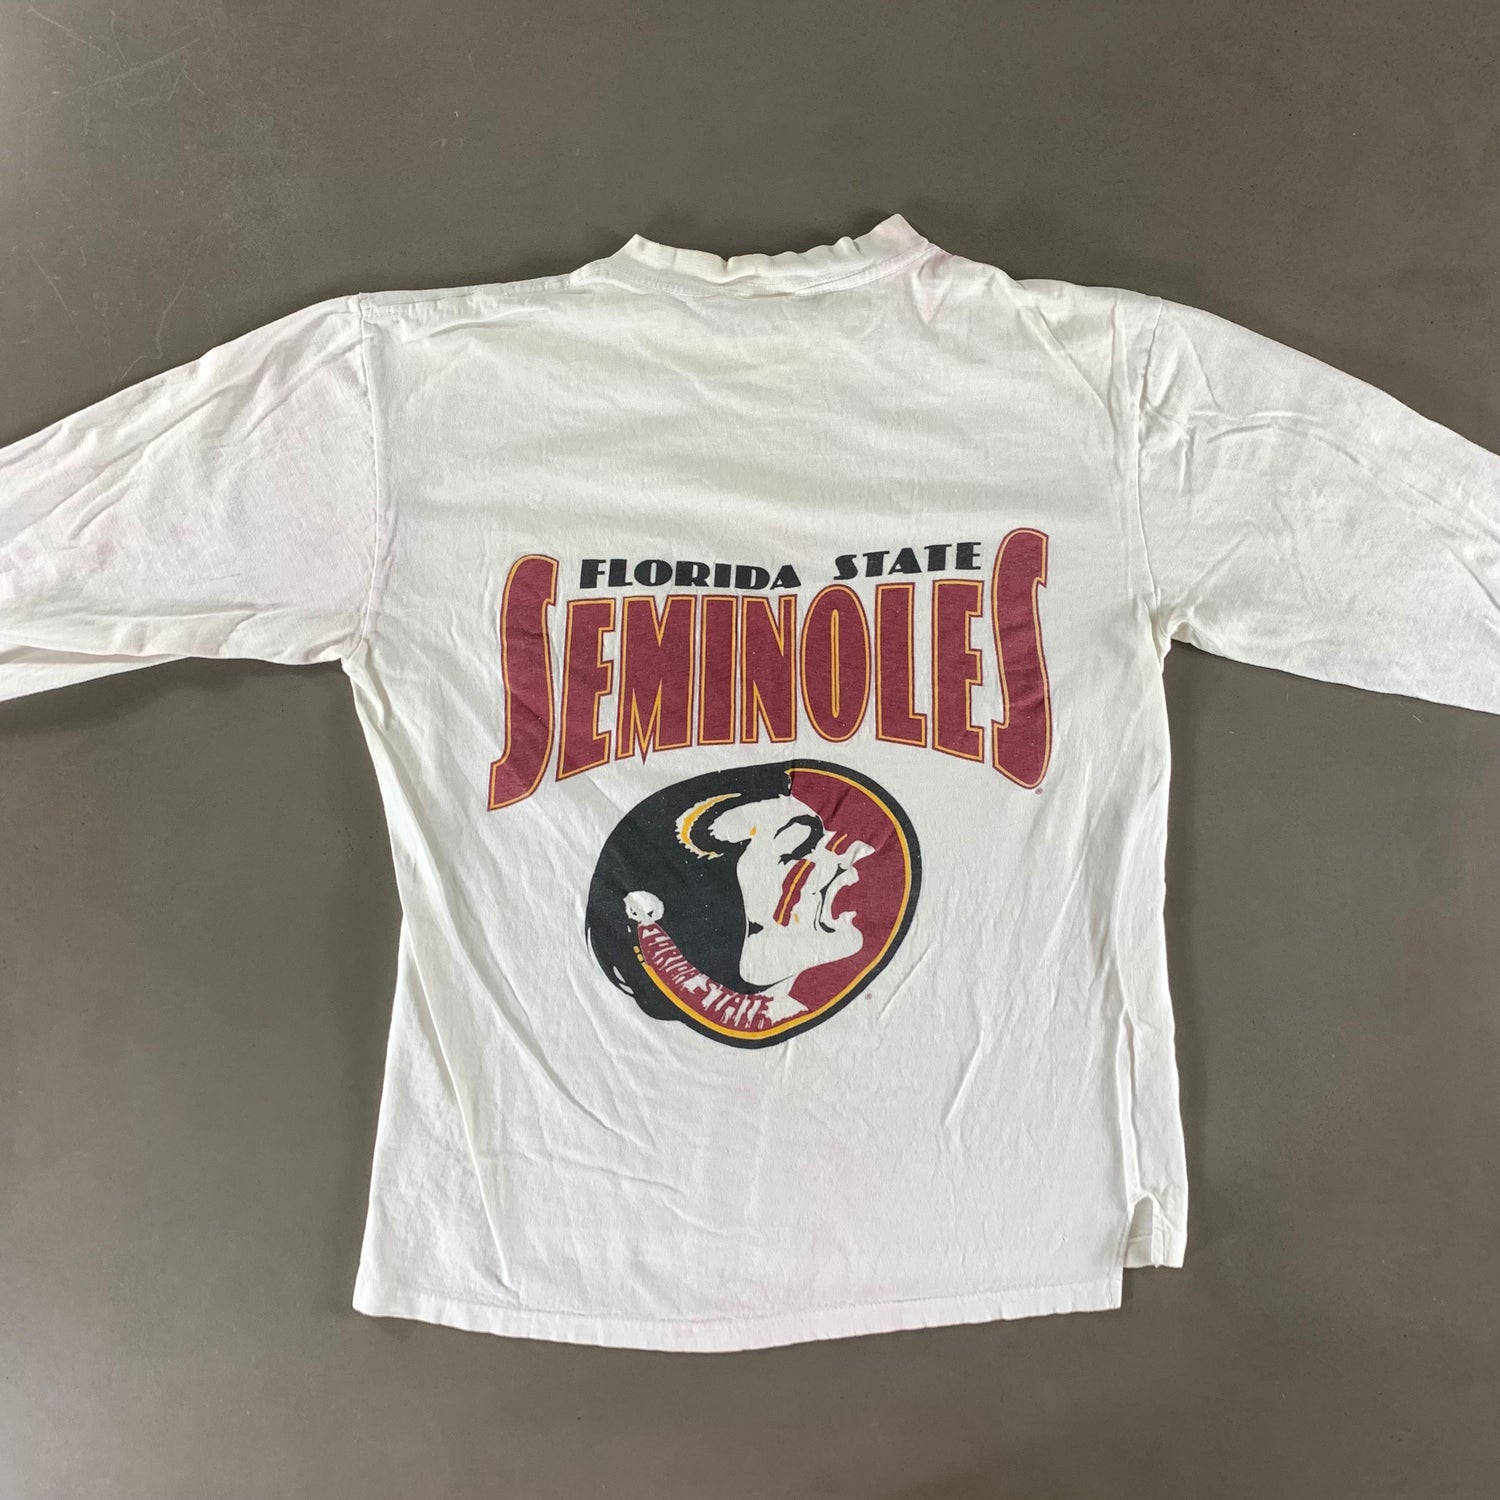 Vintage 1990s Florida State University T-shirt size XL